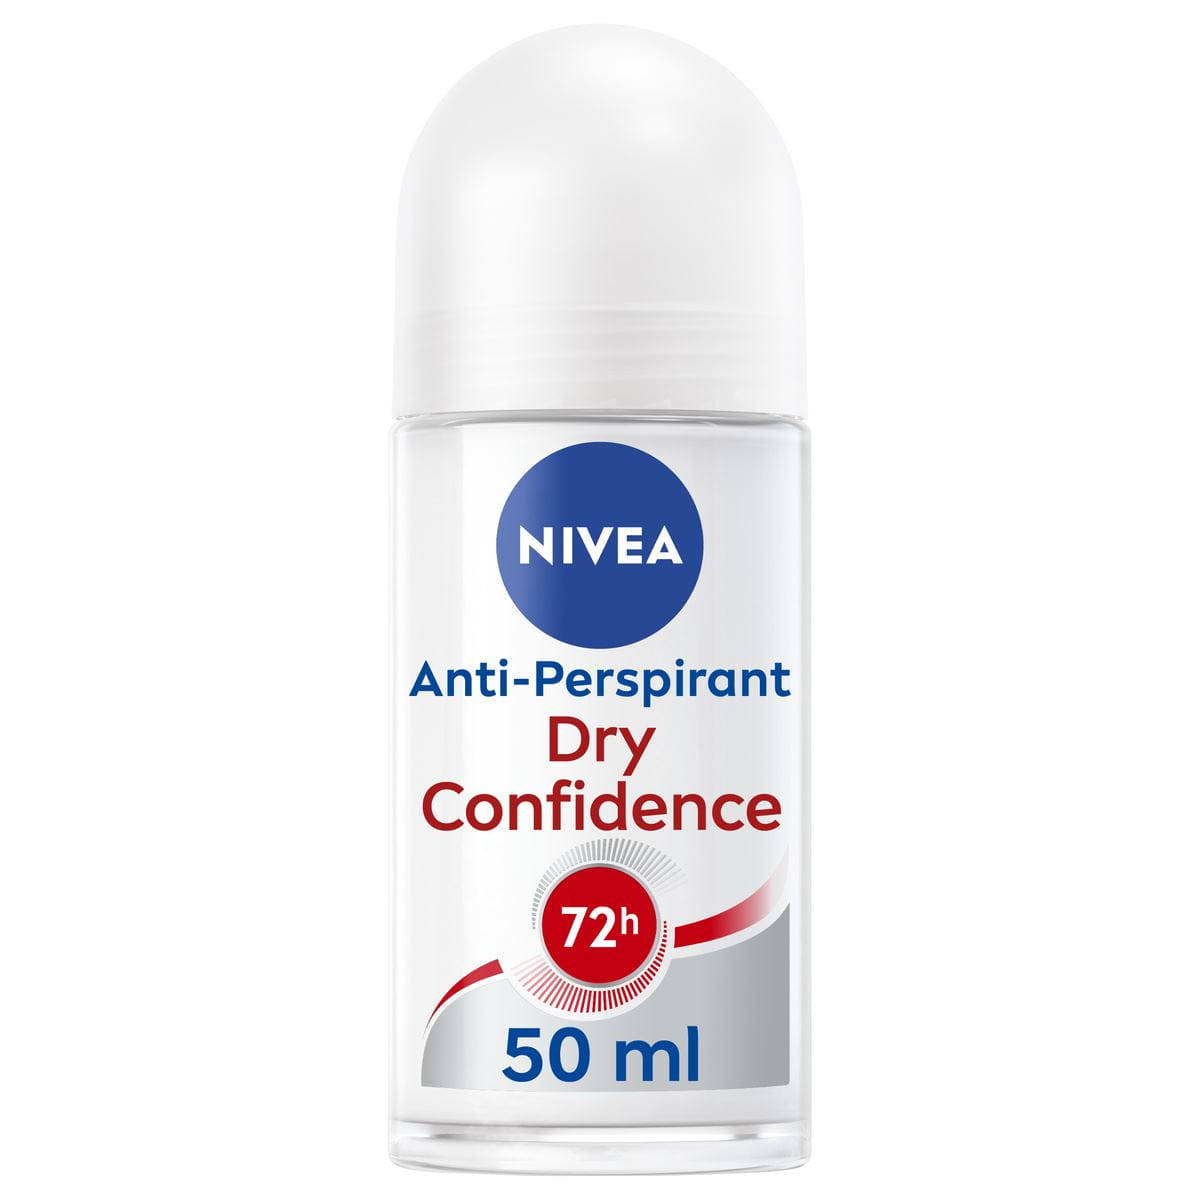 NIVEA Dry Comfort Roll-On Anti-Perspirant Deodorant, 50 ml - oh feliz